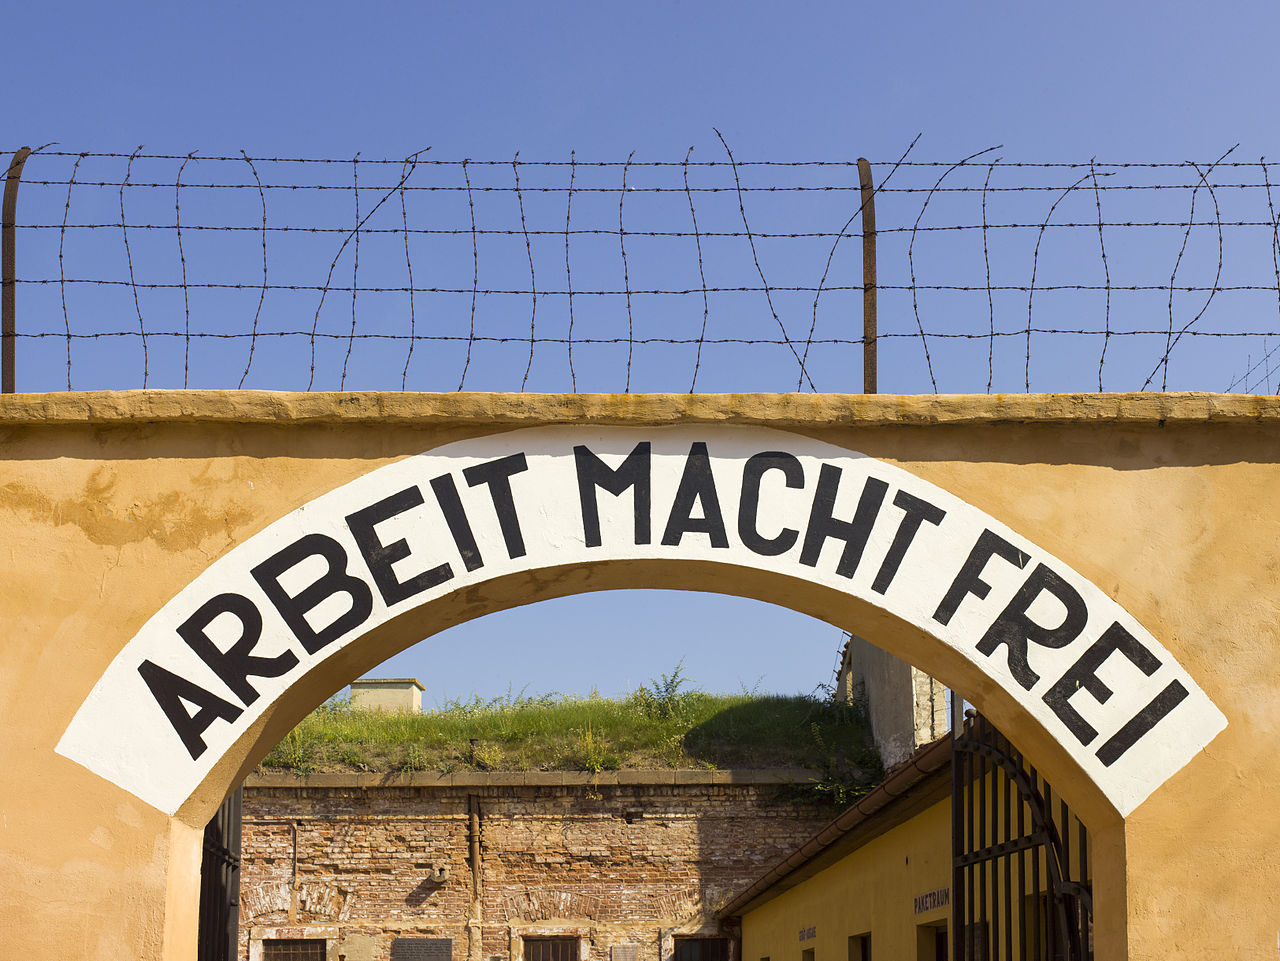 Czech-2013-Theresienstadt-Arbeit_Macht_Frei_(detail).jpg